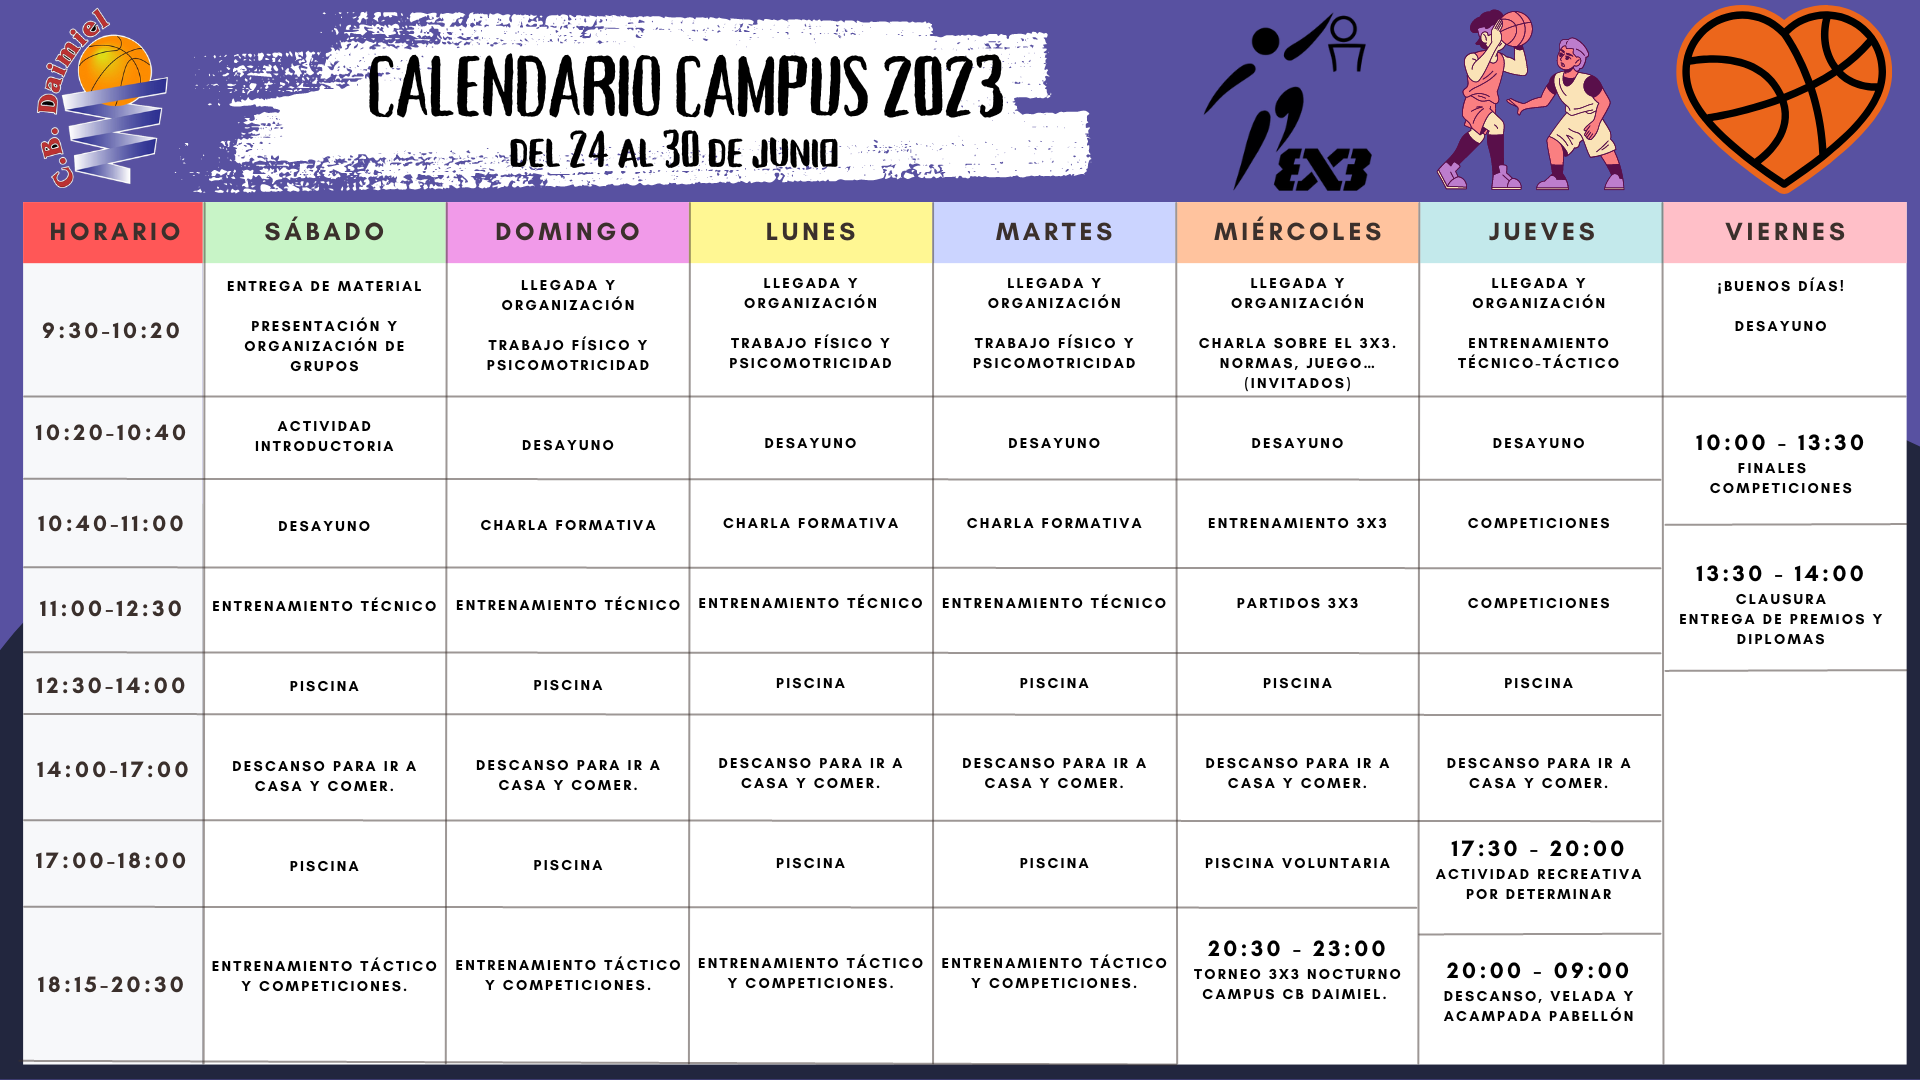 Calendario Campus CB Daimiel 2023